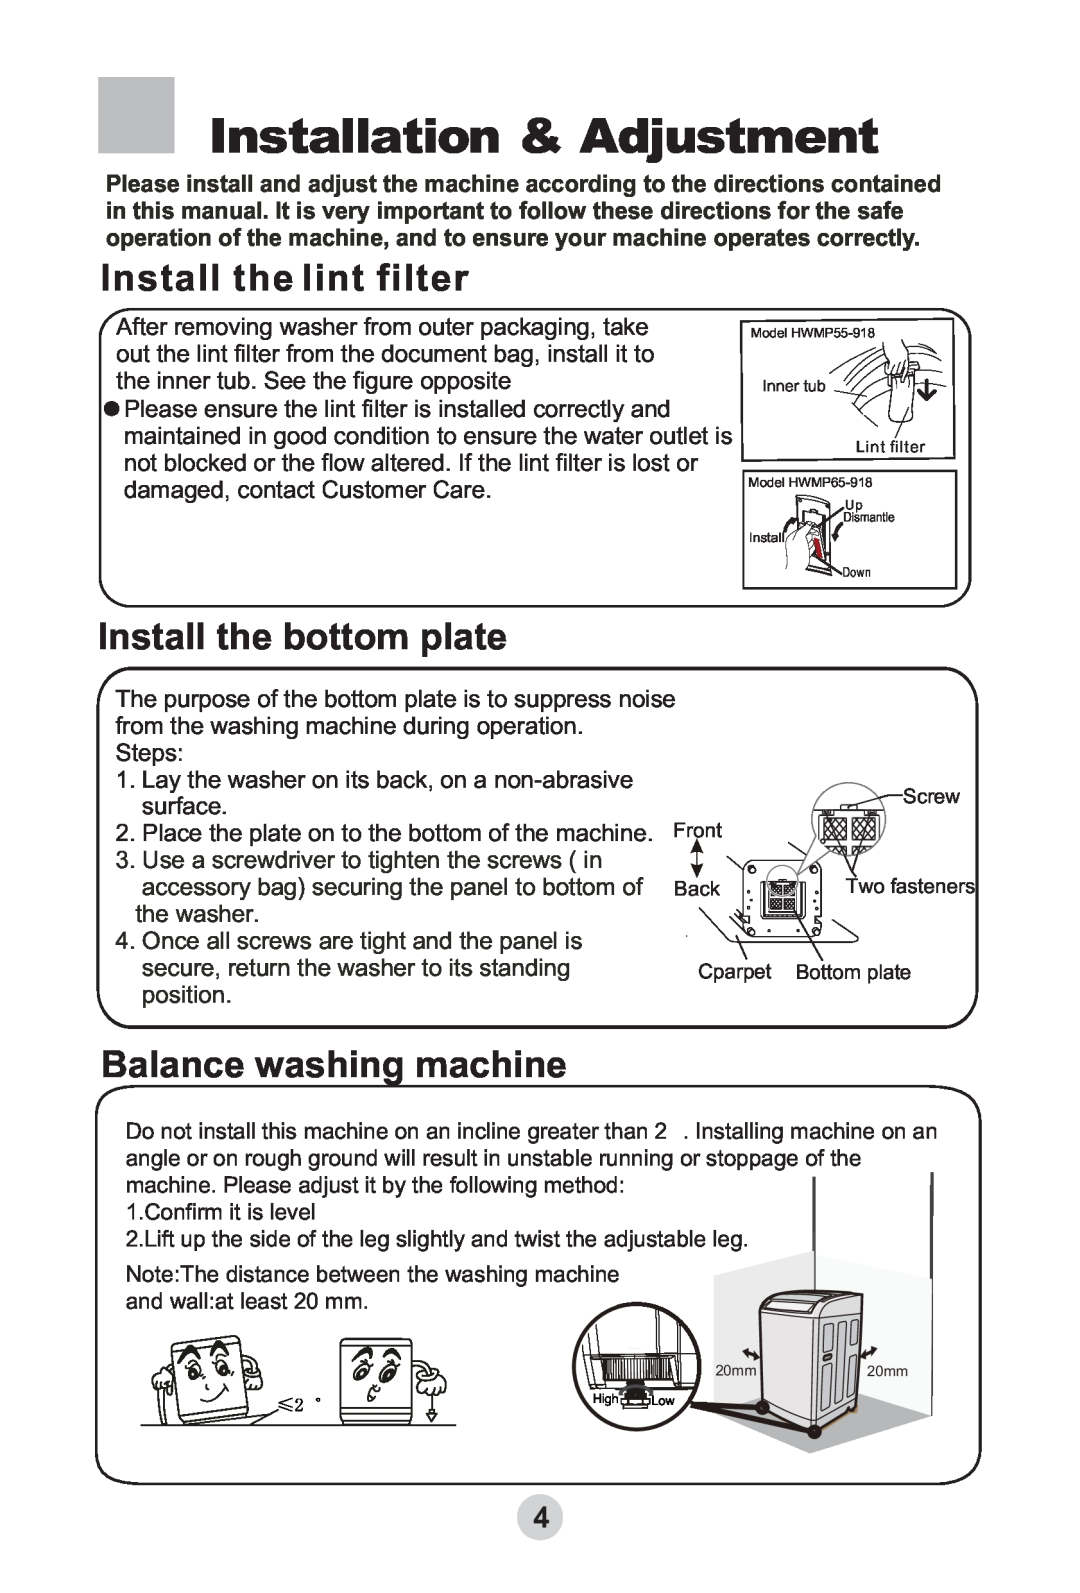 Haier HWMP65-918 Installation & Adjustment, Install the lint filter, Install the bottom plate, Balance washing machine 